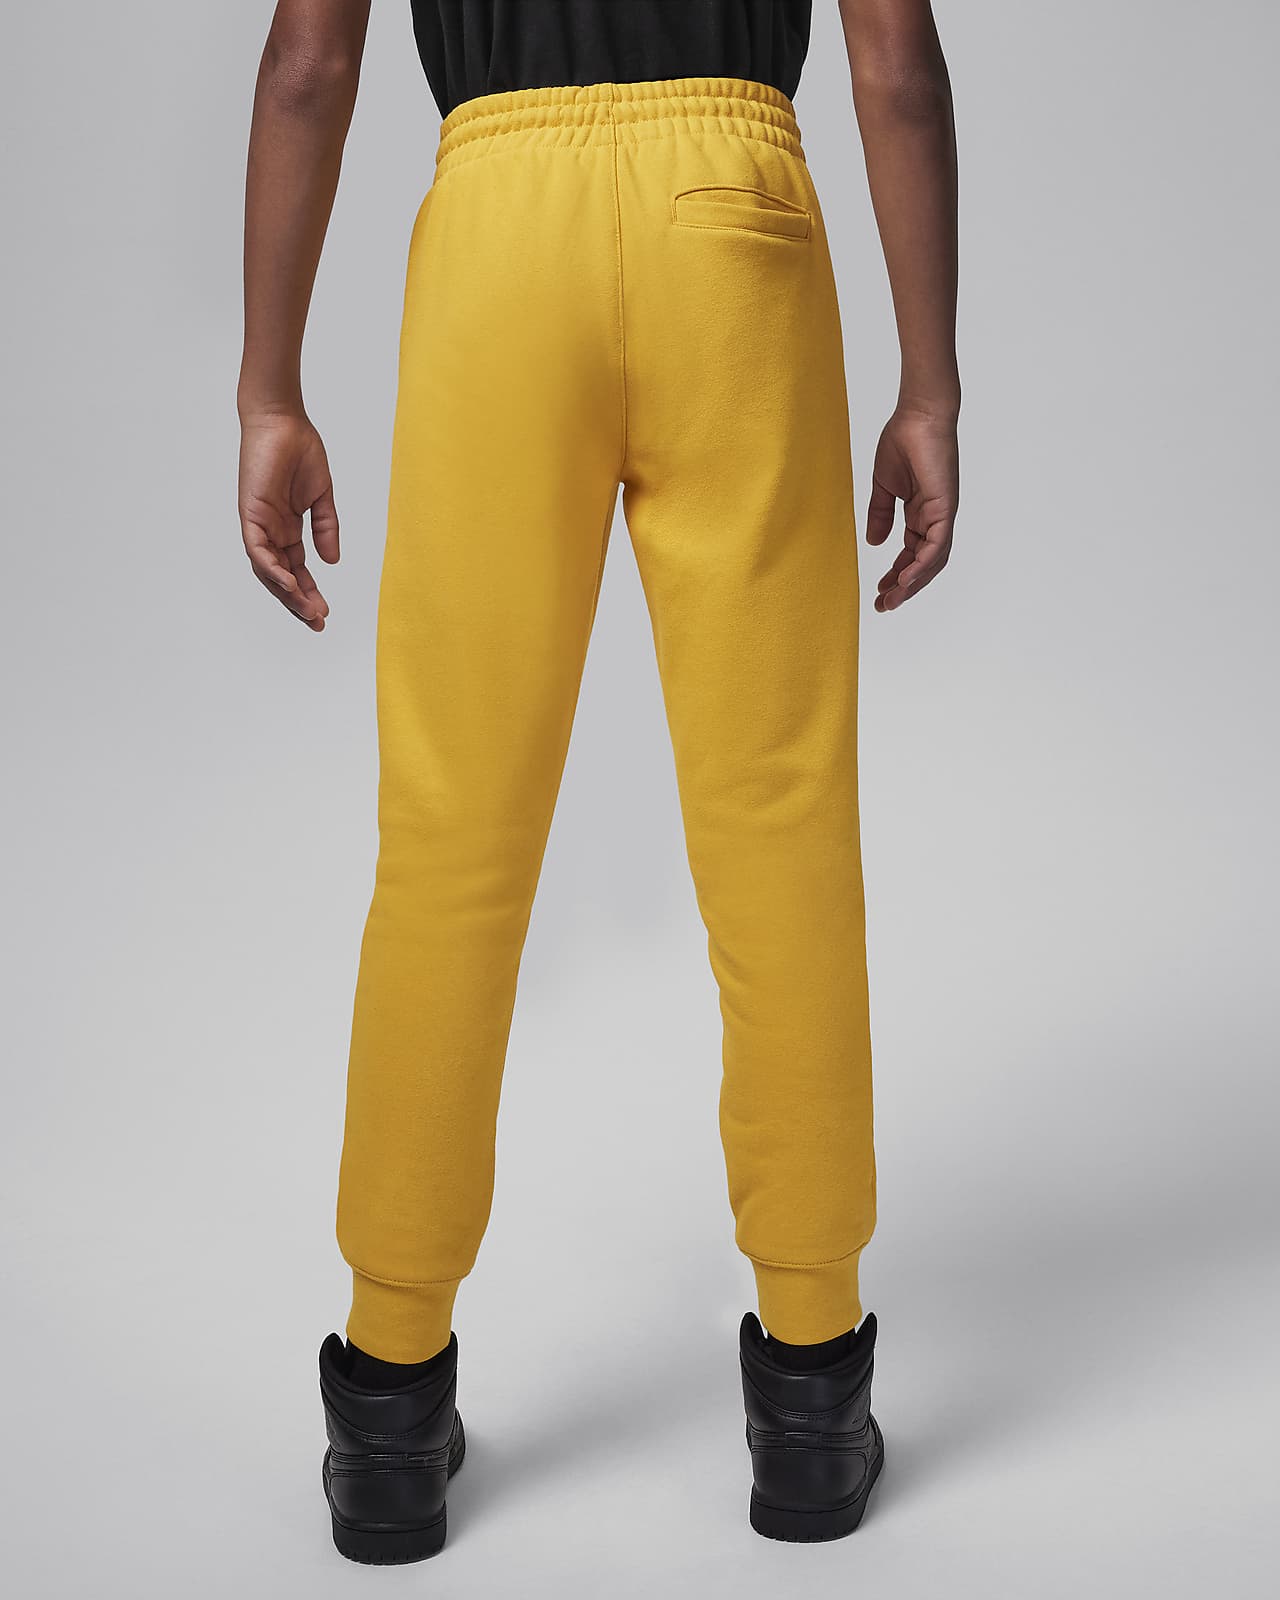  Jordan Boy's MJ Essentials All Over Print Fleece Pants